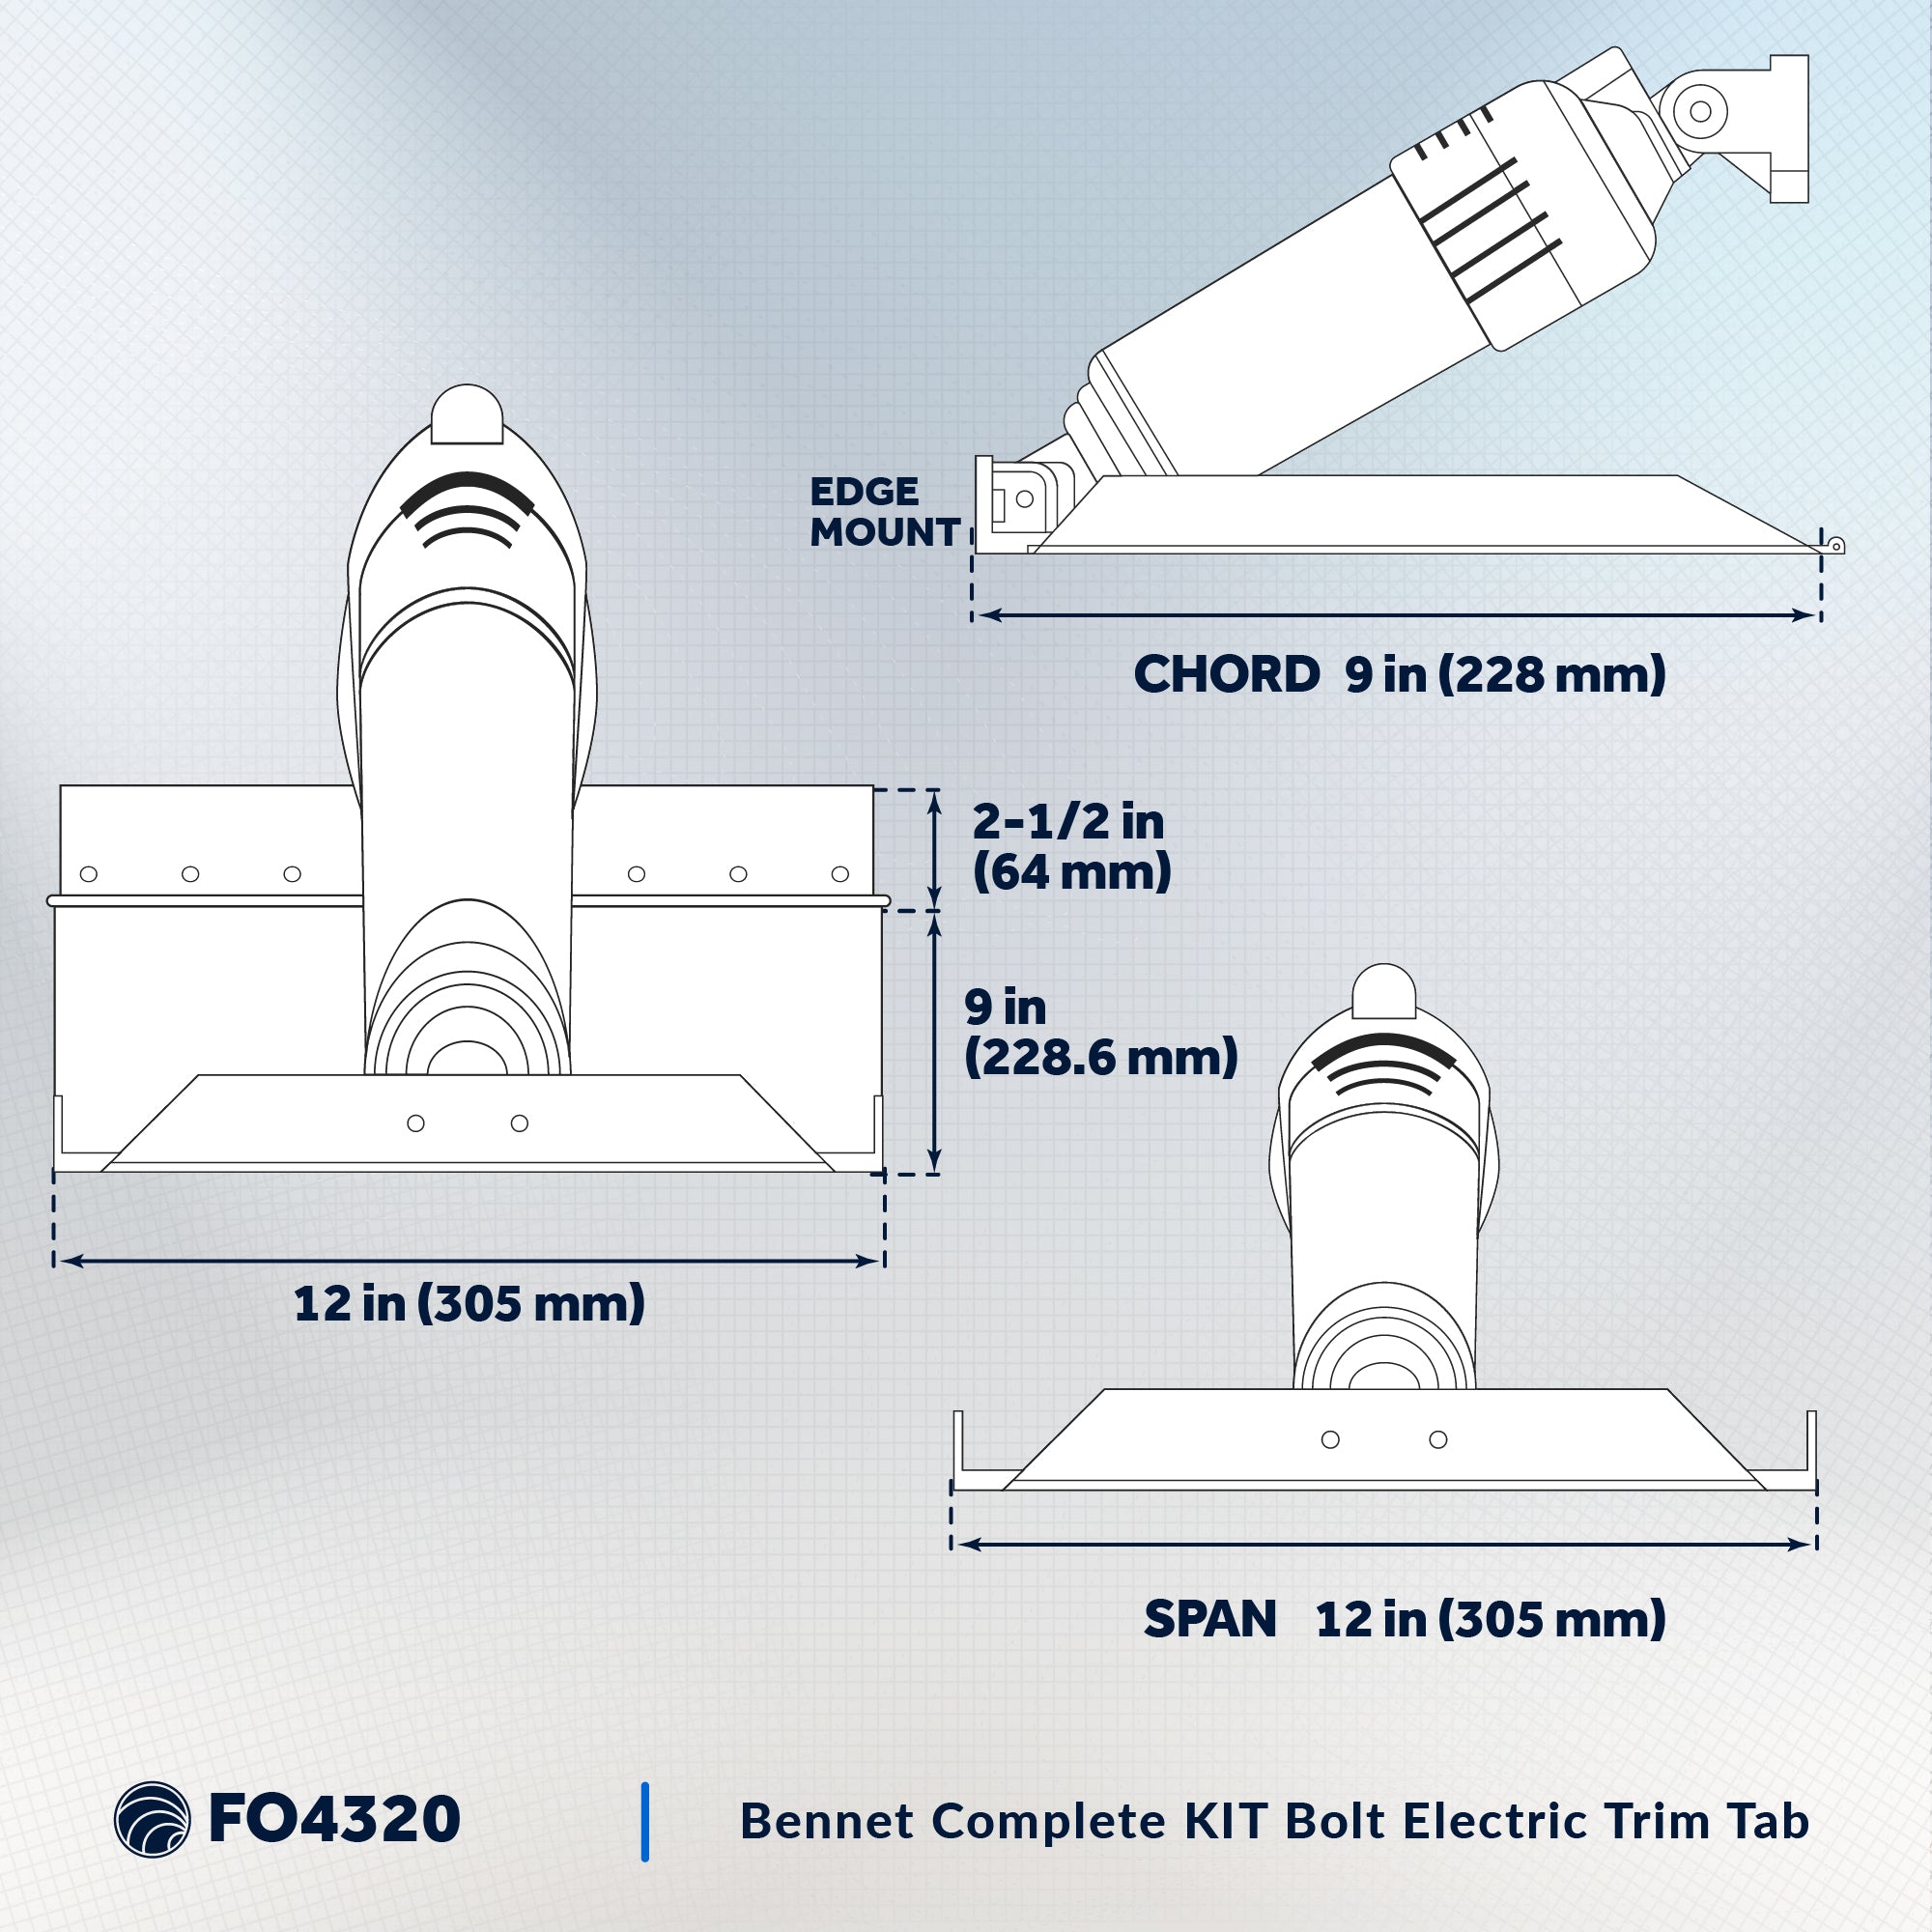 Bolt Electric Trim Tab System 12" x 9", Complete Kit BOLT129, 12V DC - FO4320